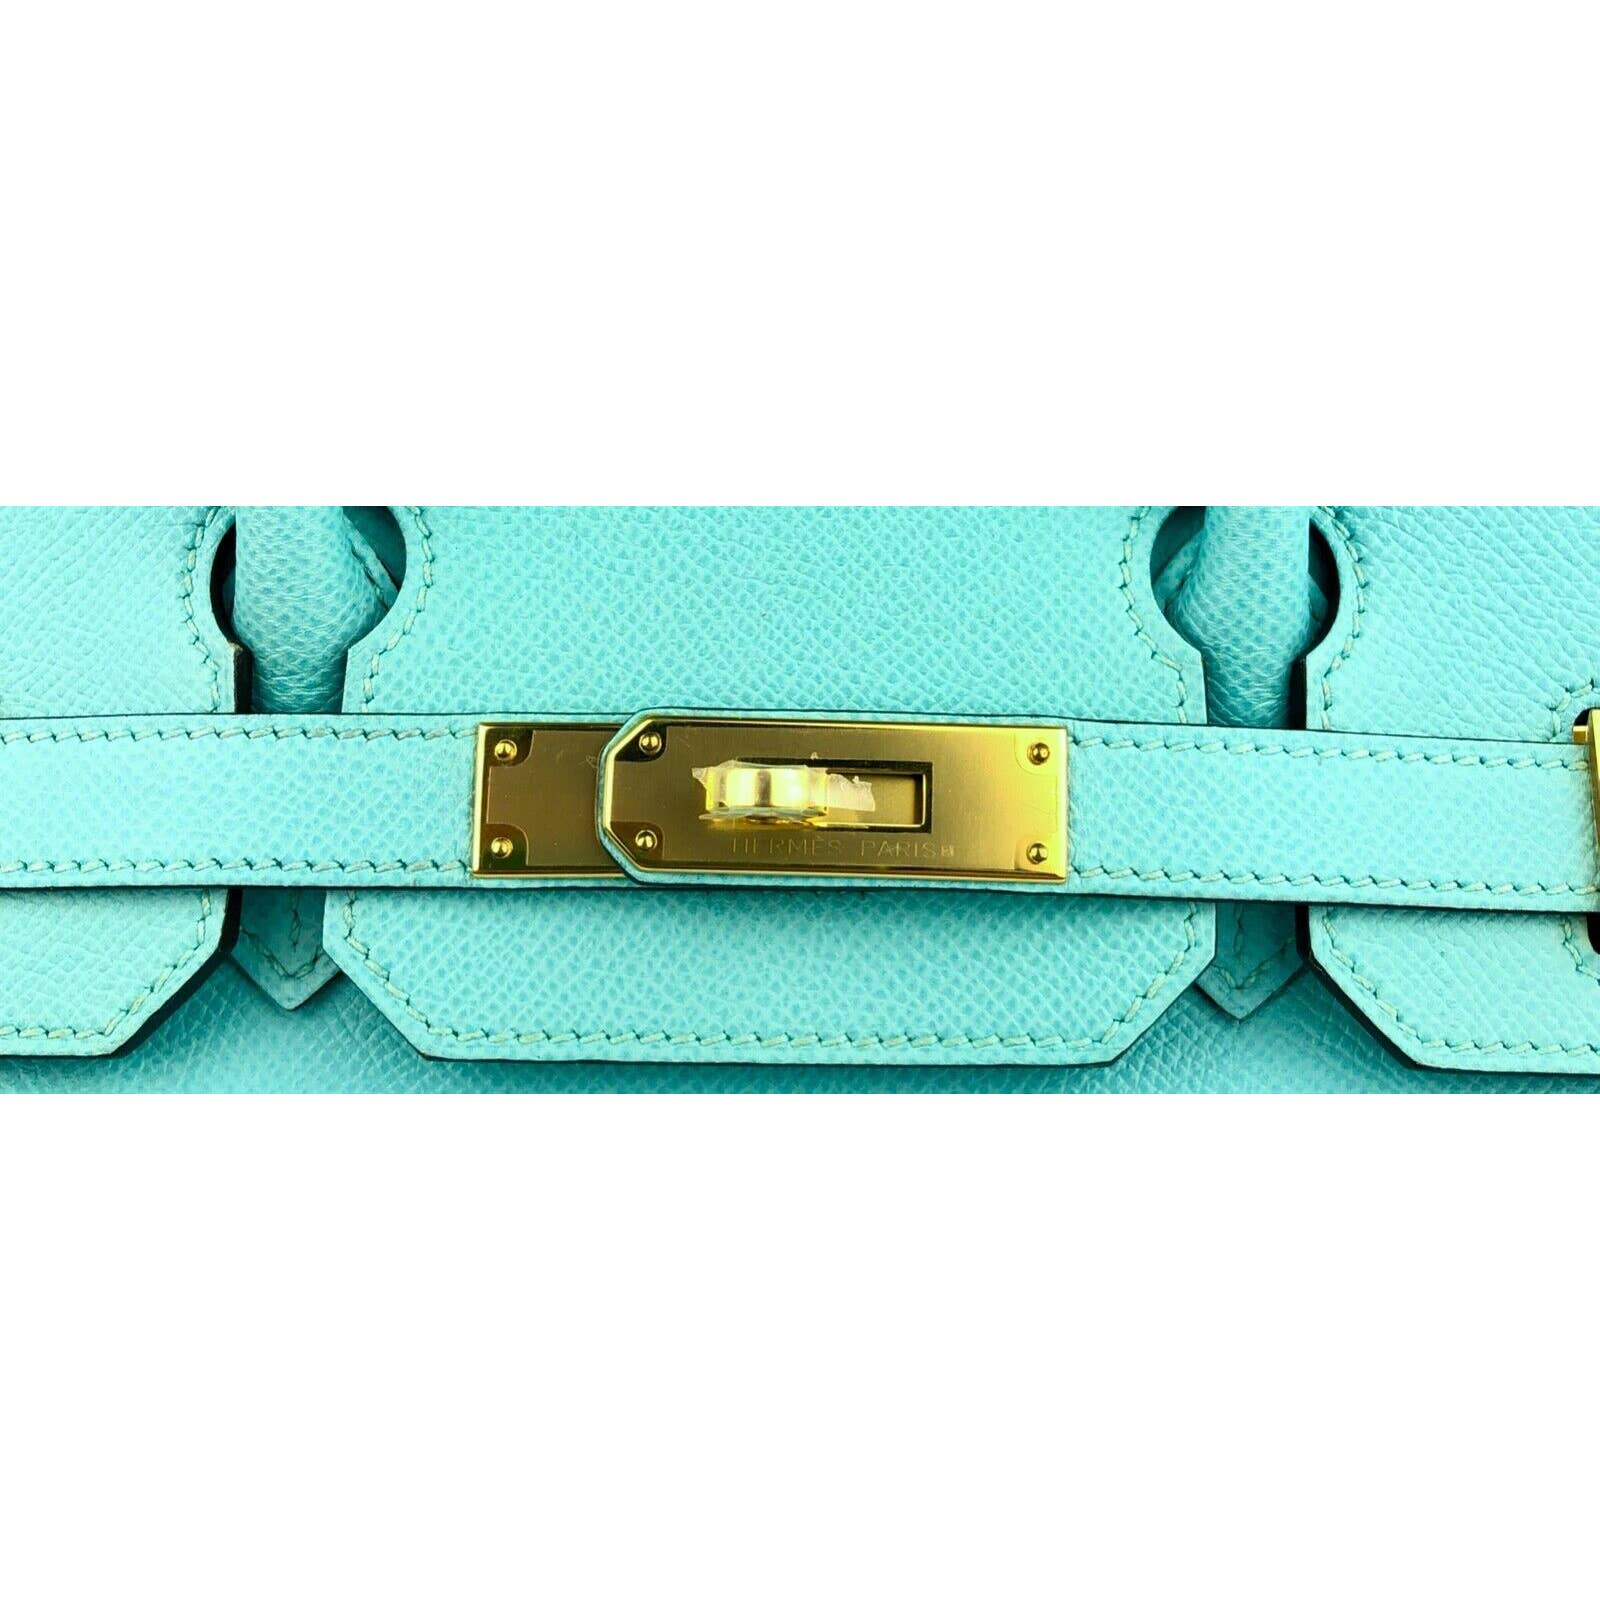 Hermes 30cm Blue Atoll Epsom Leather Birkin Bag with Gold Hardware